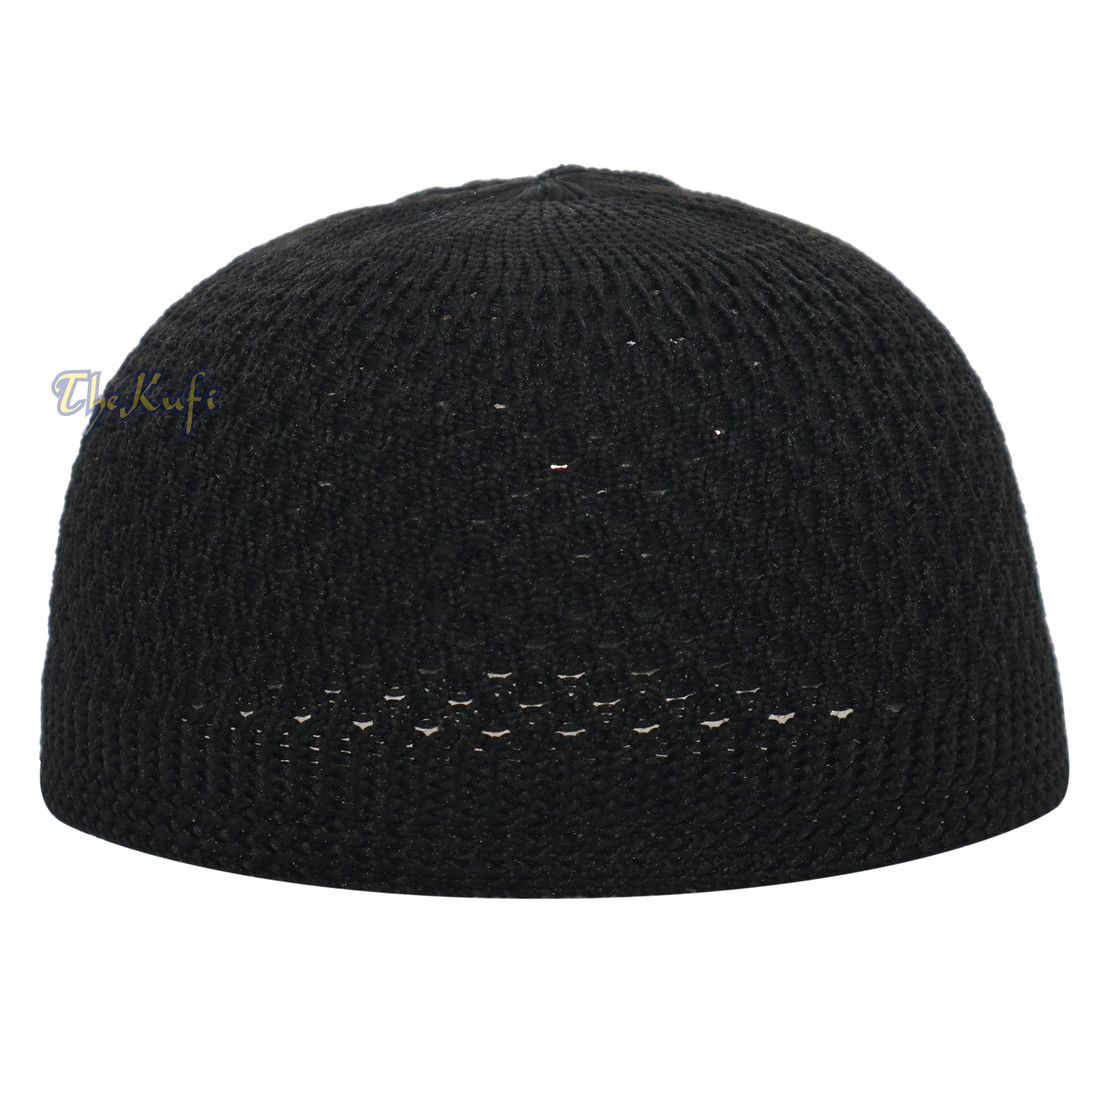 Black Nylon Kufi – Open-weave Stretchy Comfortable Muslim Skull Prayer Cap Head Cover